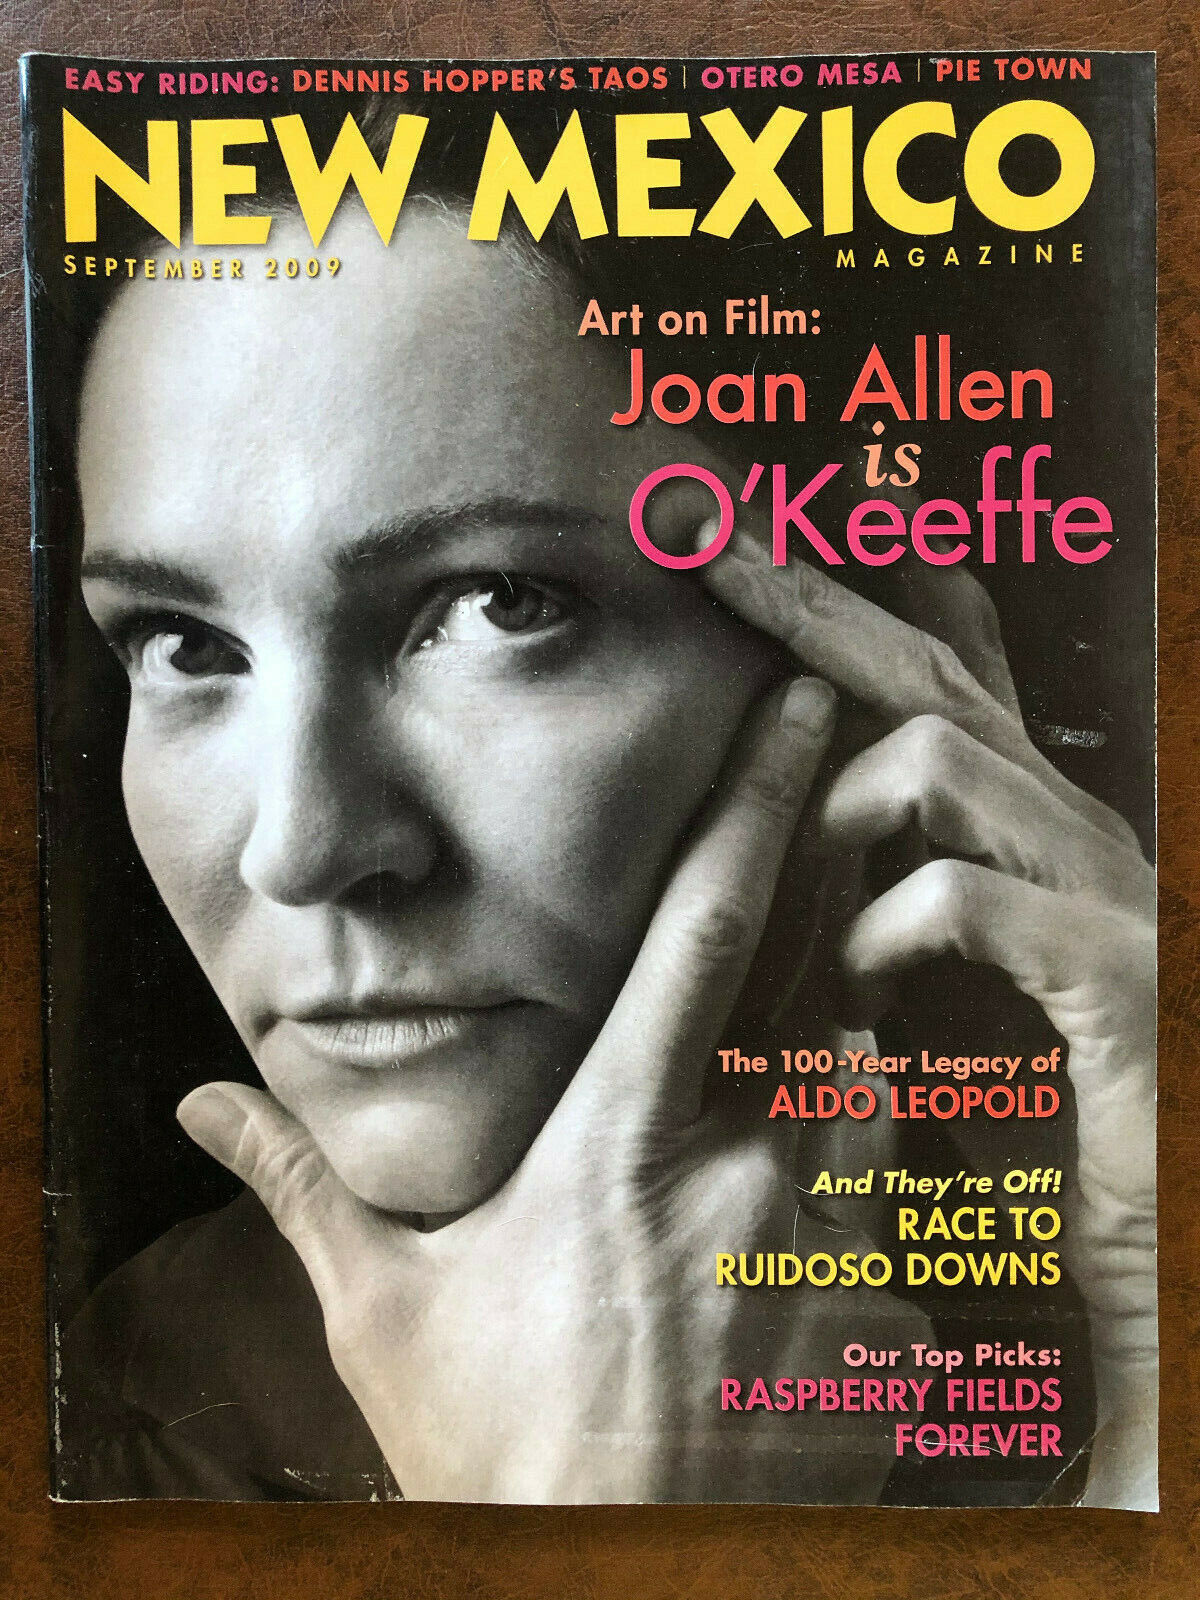 NEW MEXICO Magazine September 2009 Georgia O'Keefe Aldo Leopold Ruidoso Downs